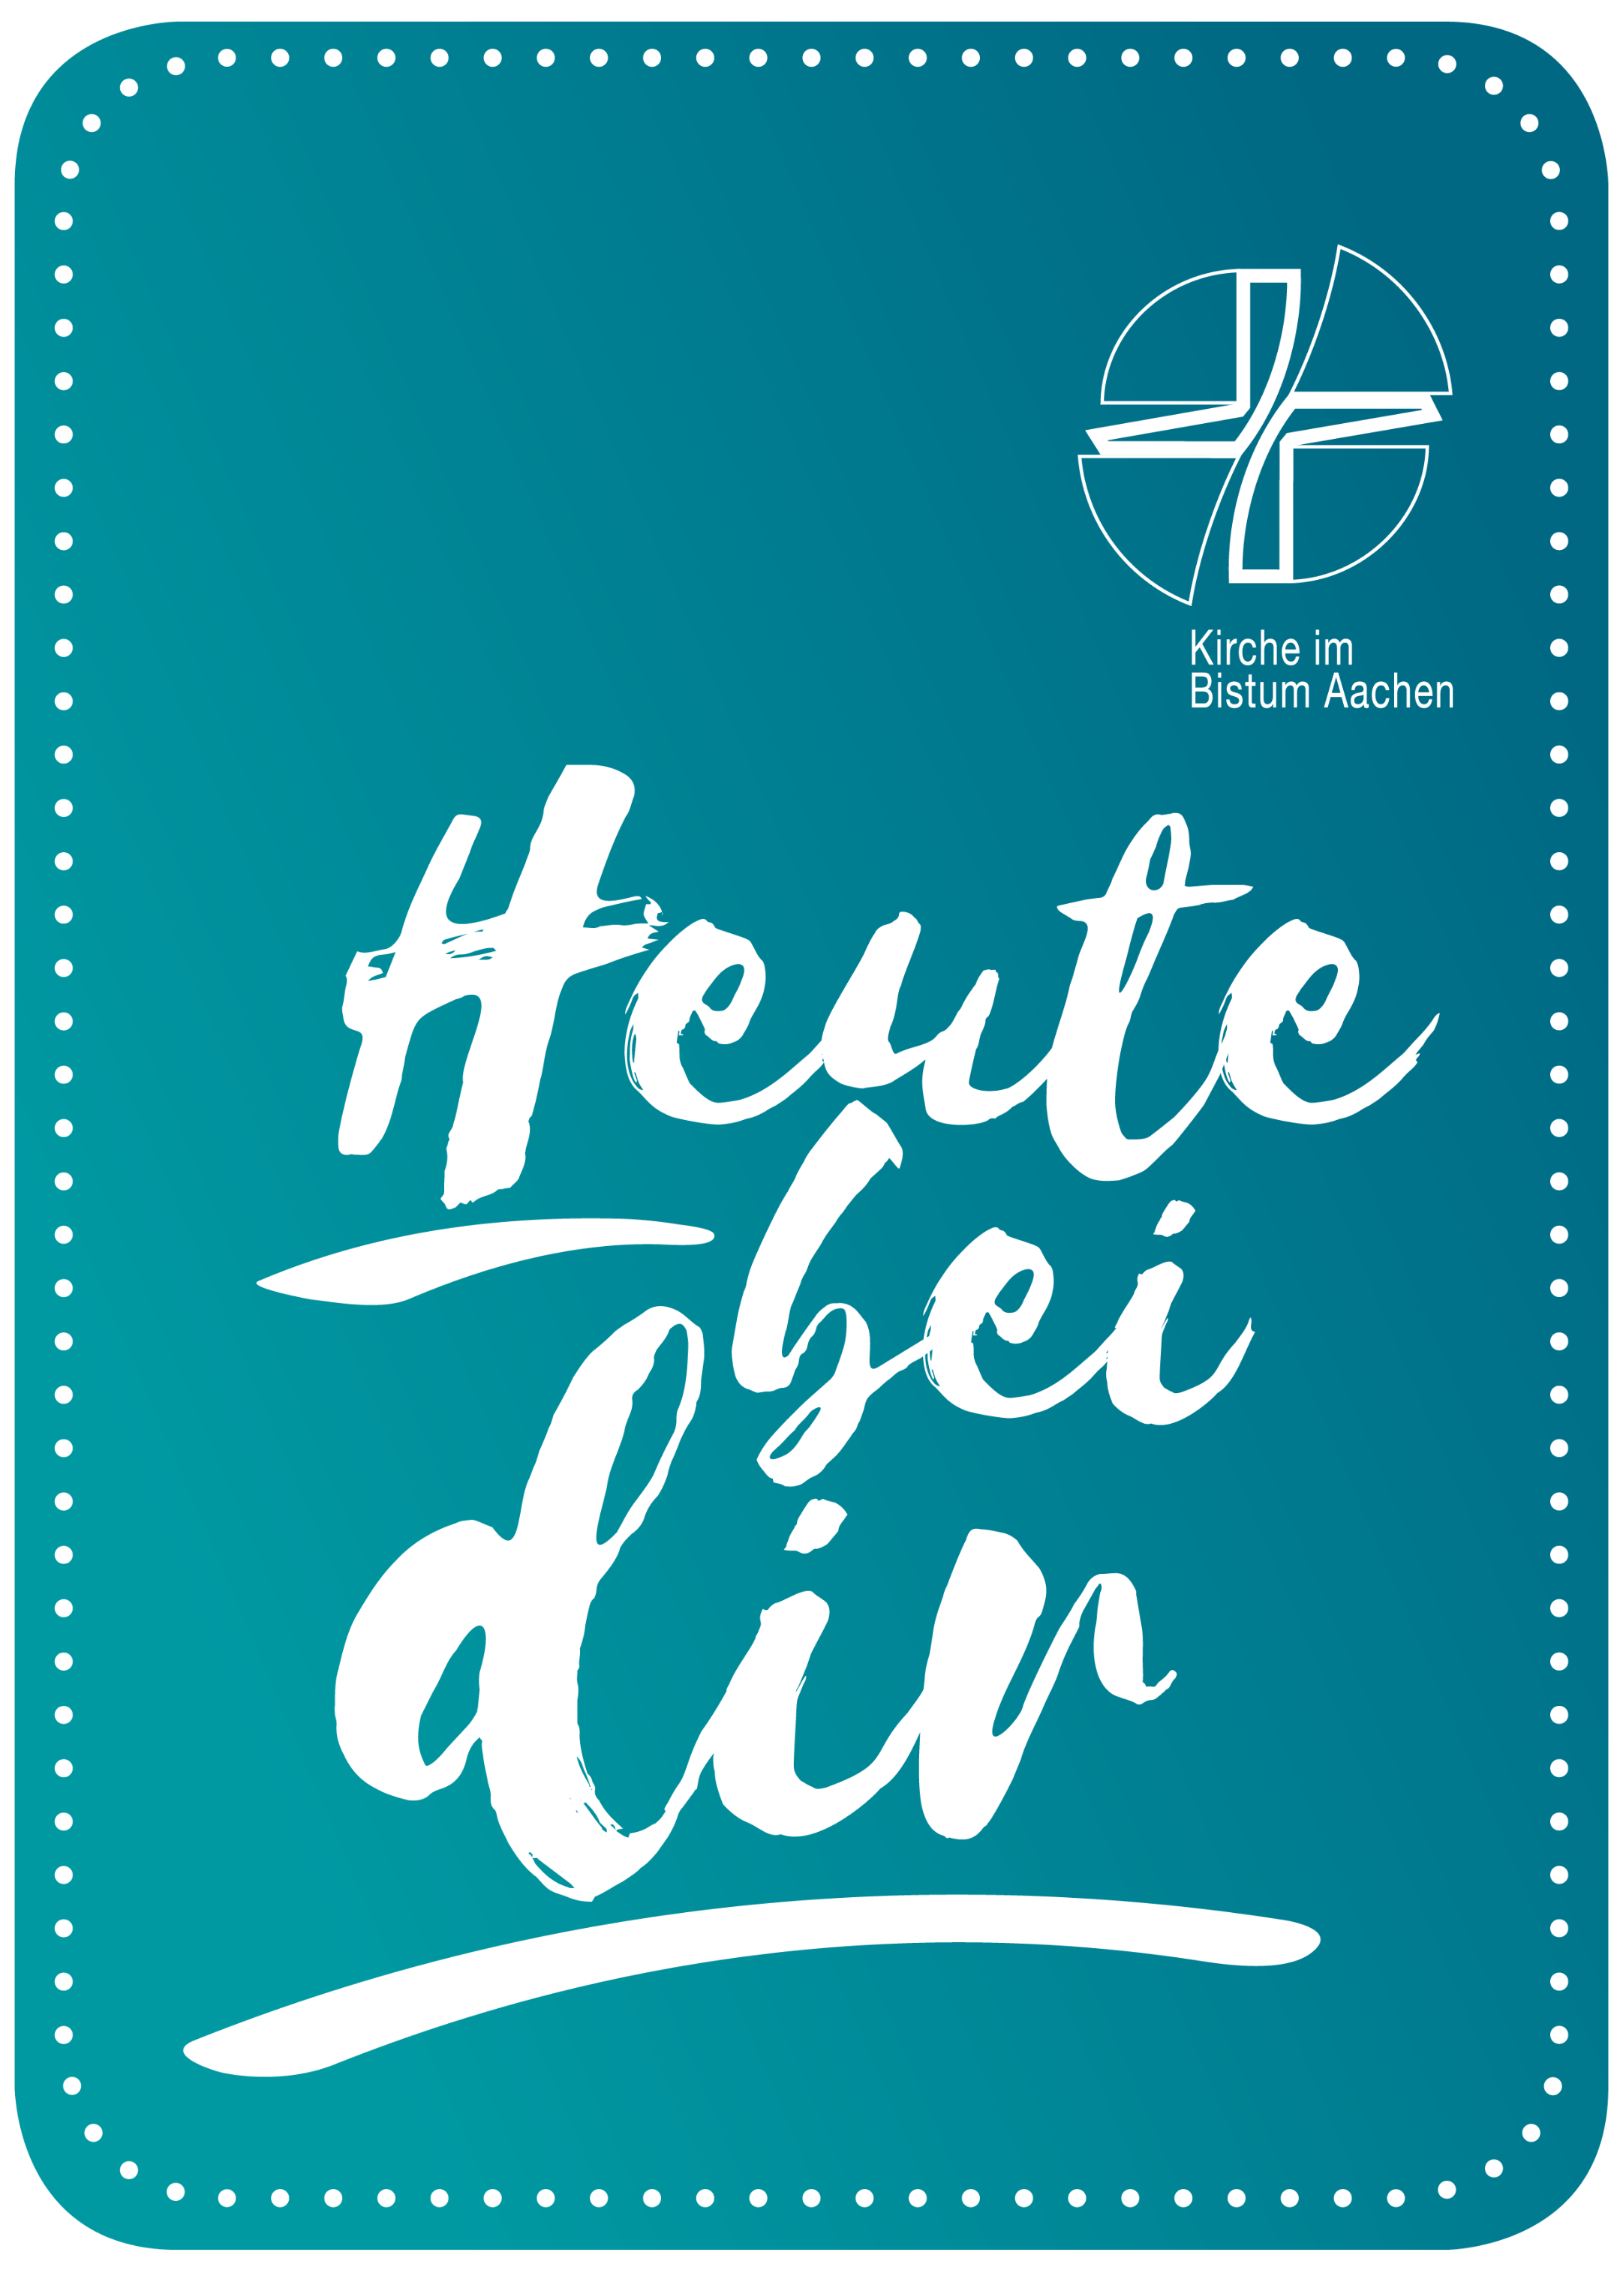 Erkelenz Logo Heute bei dir Bistum Aachen (c) HBD_Logo_Label_geschlossen_blauverlauf_RGB